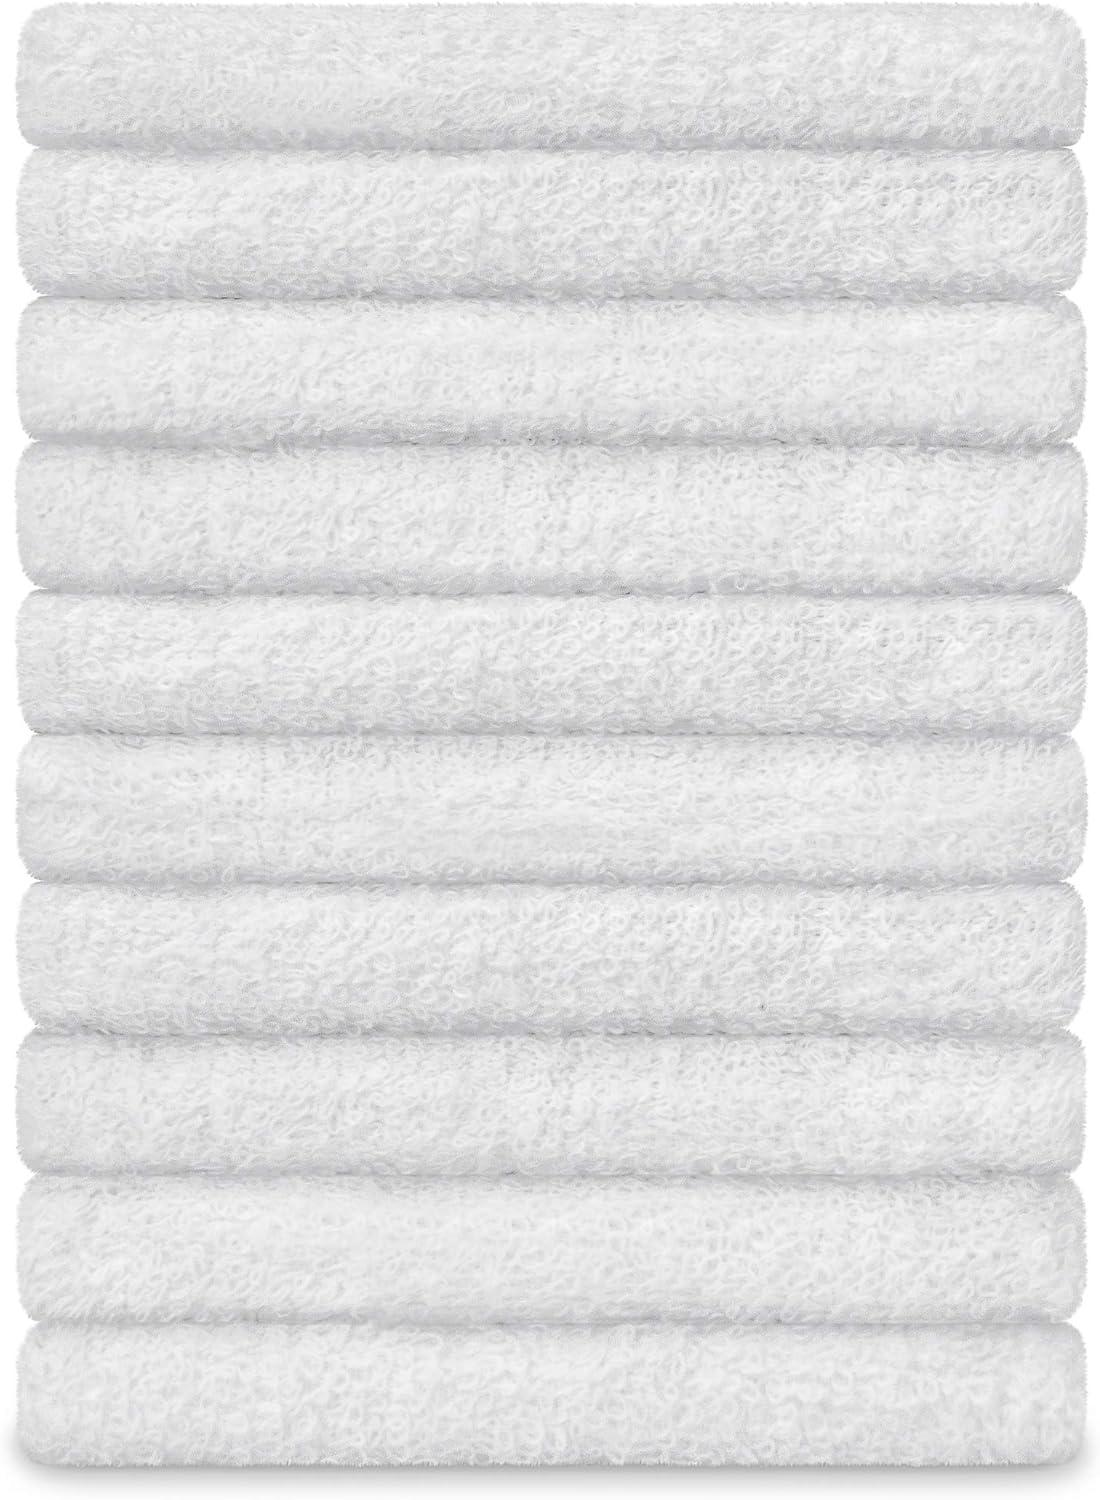 Decorrack 100% Cotton Wash Cloth, 12 x 12 inch, White (10 Pack)